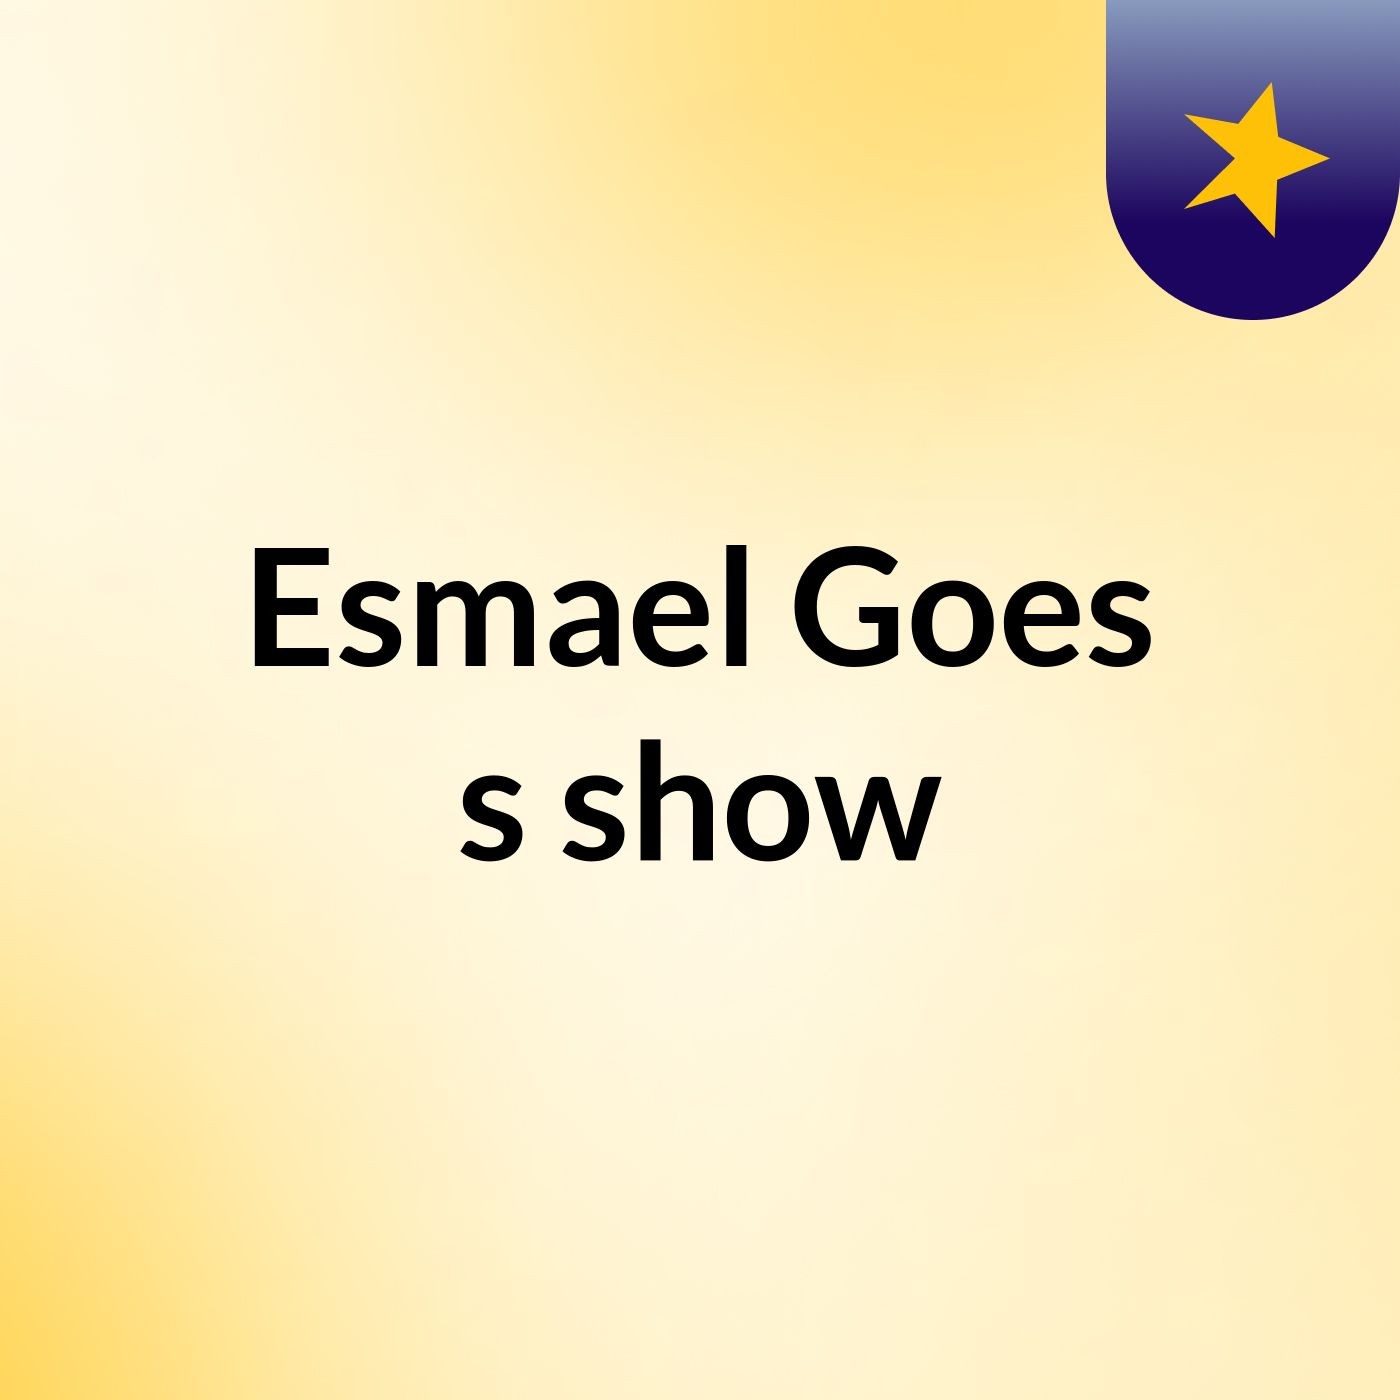 Esmael Goes's show